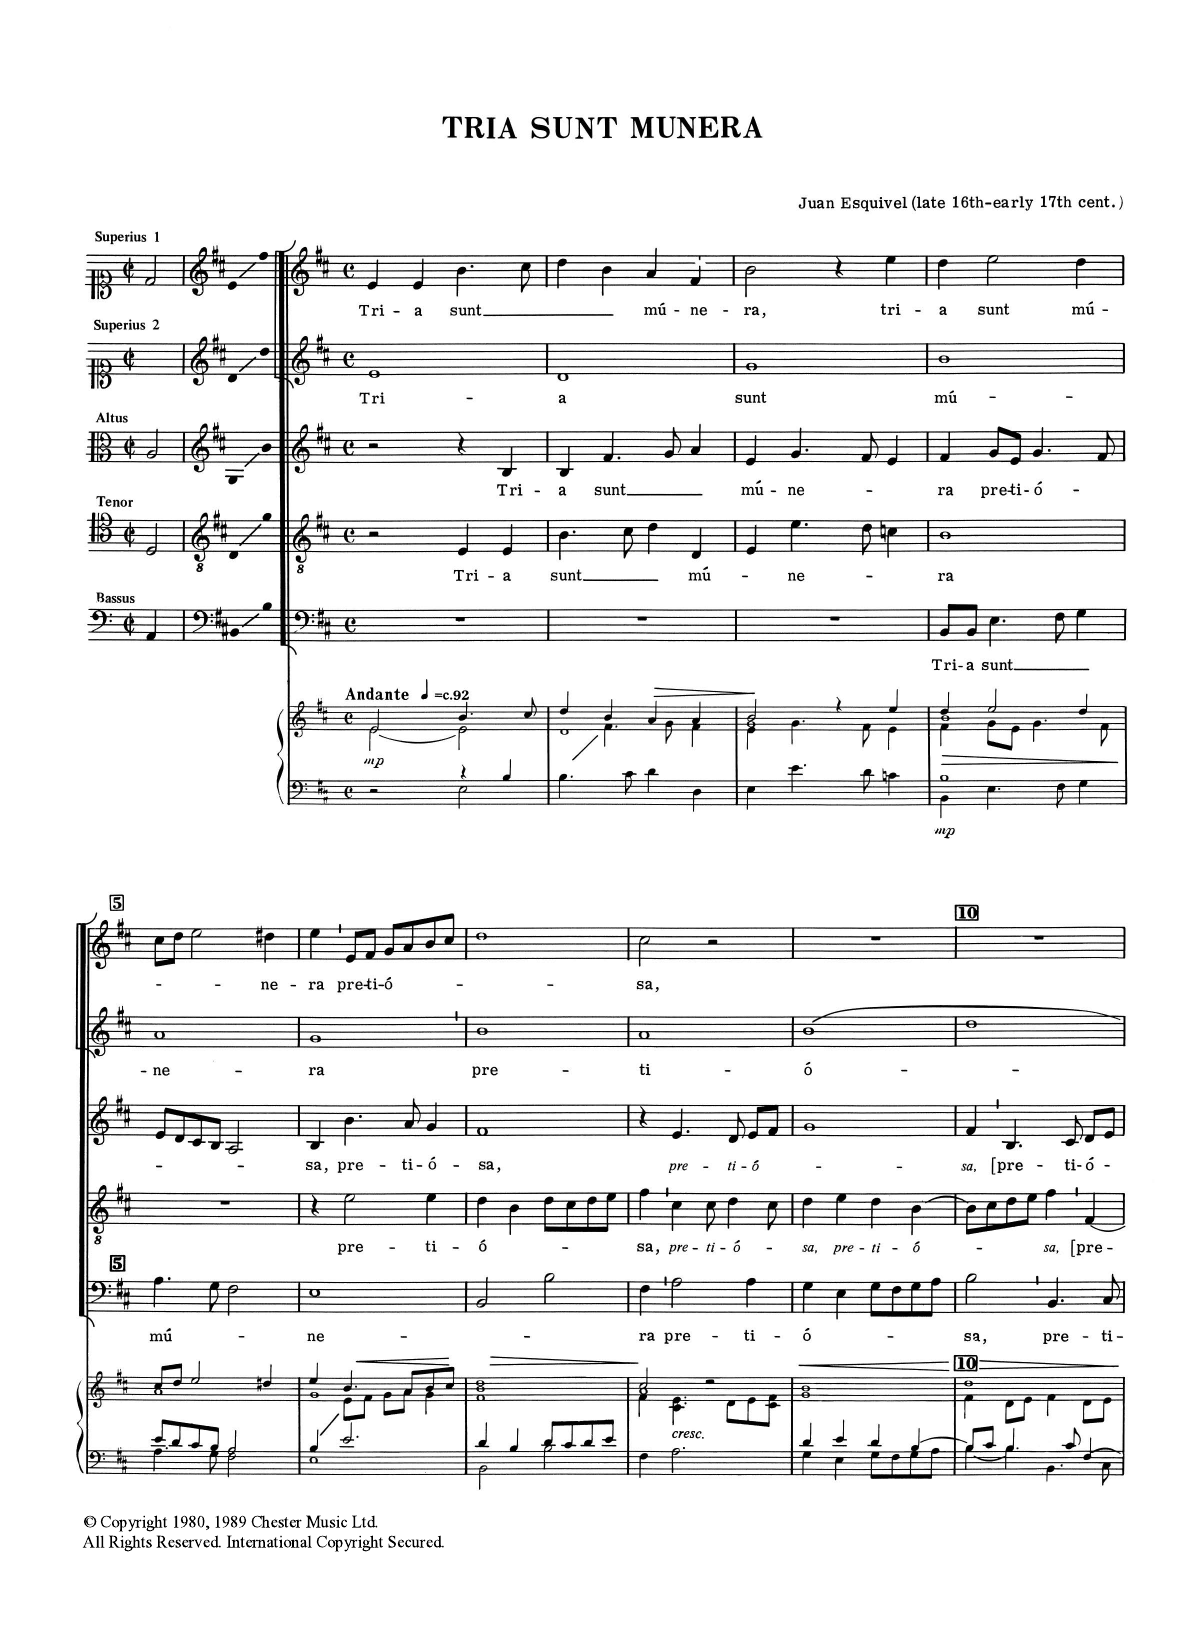 Juan Esquivel Tria Sunt Munera Sheet Music Notes & Chords for Choral SAATB - Download or Print PDF